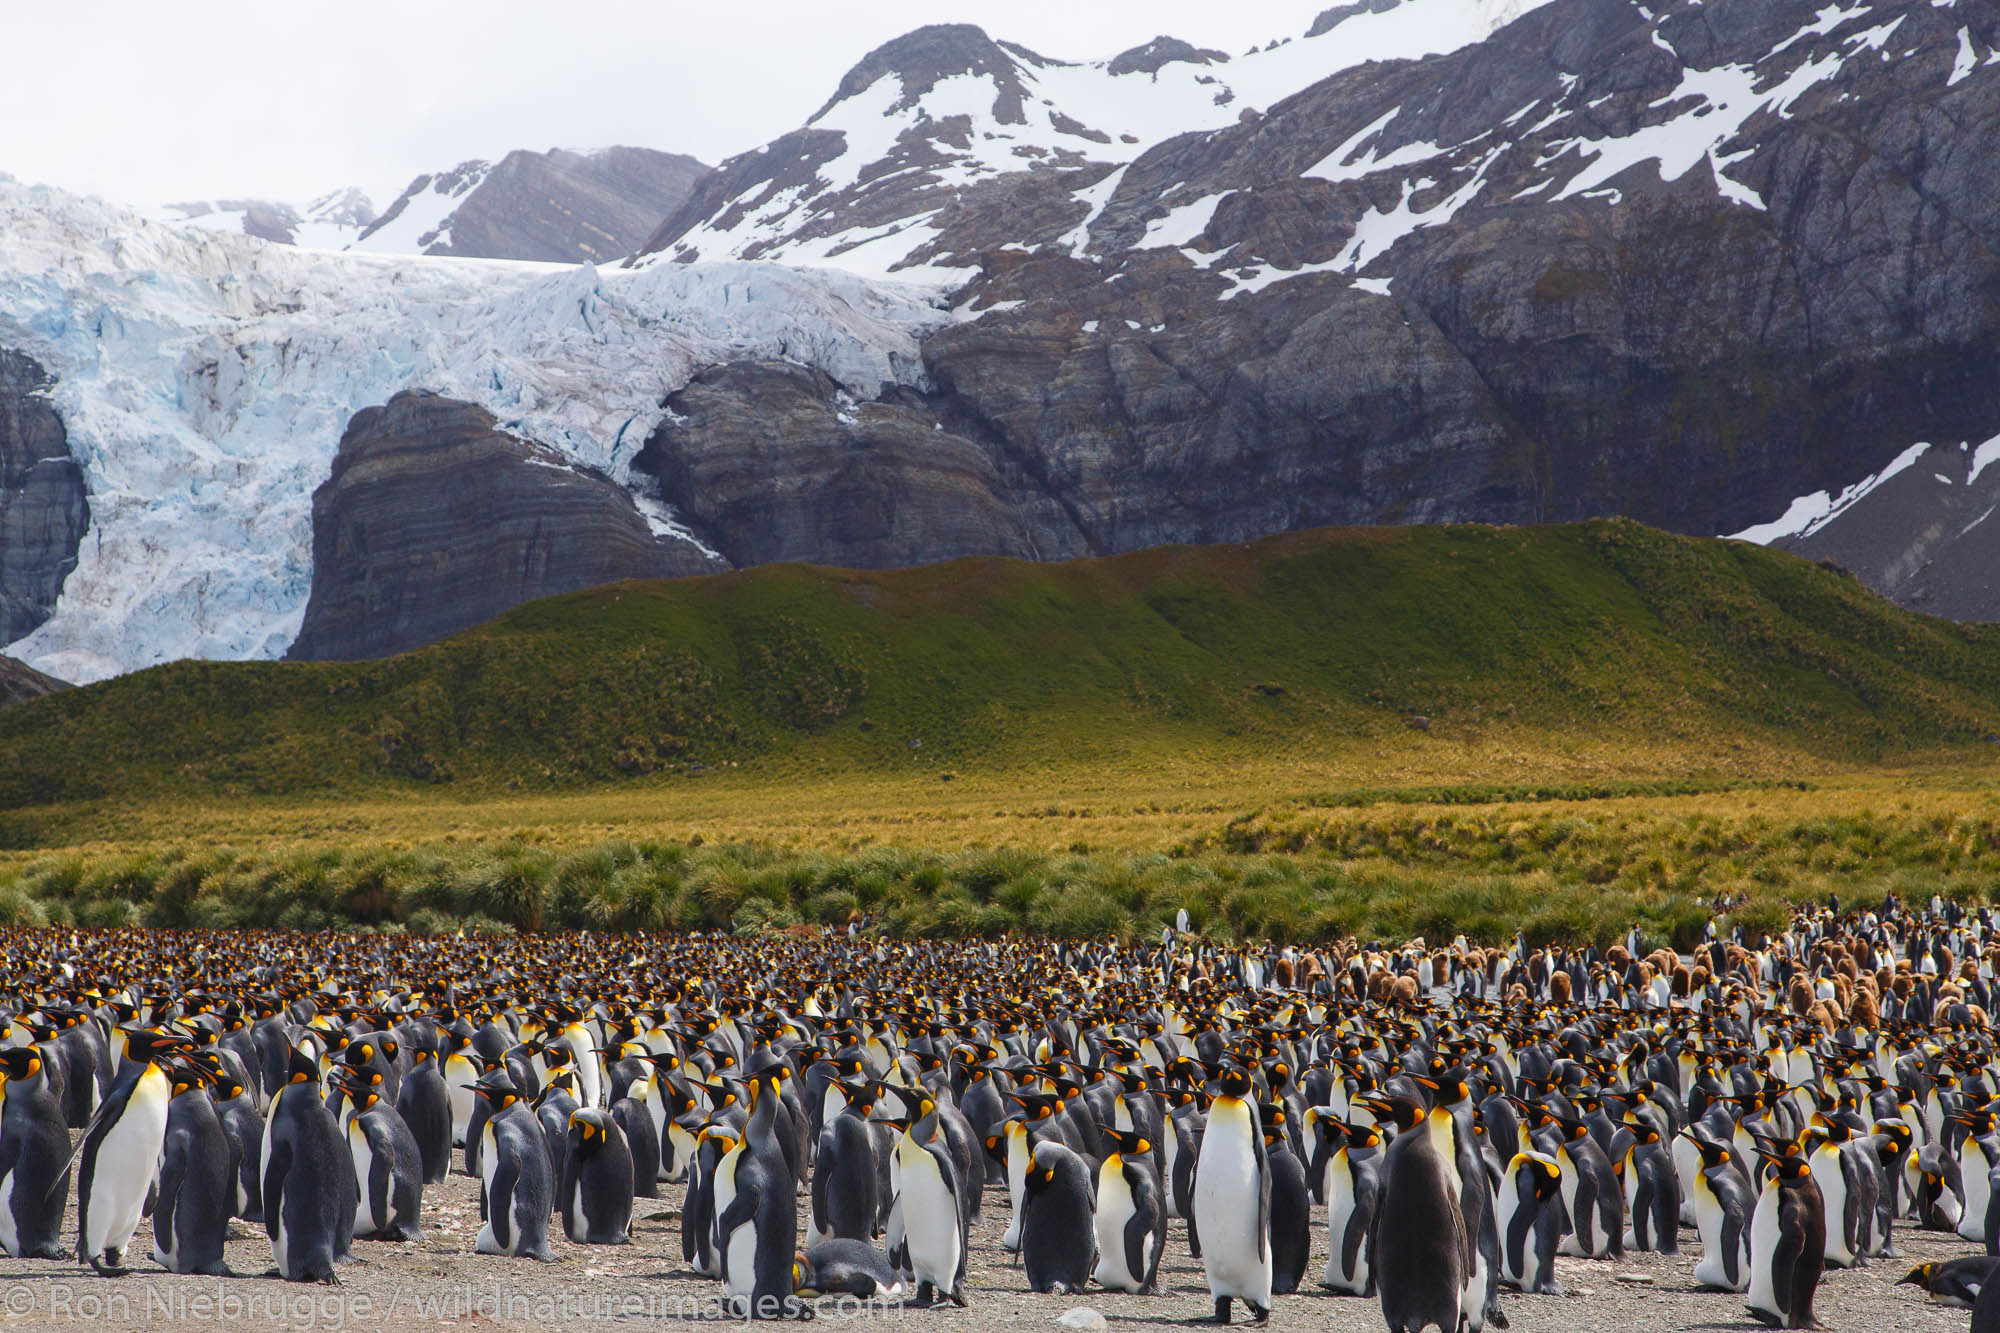 King penguins (Aptenodytes patagonicus), Gold Harbour, South Georgia, Antarctica.